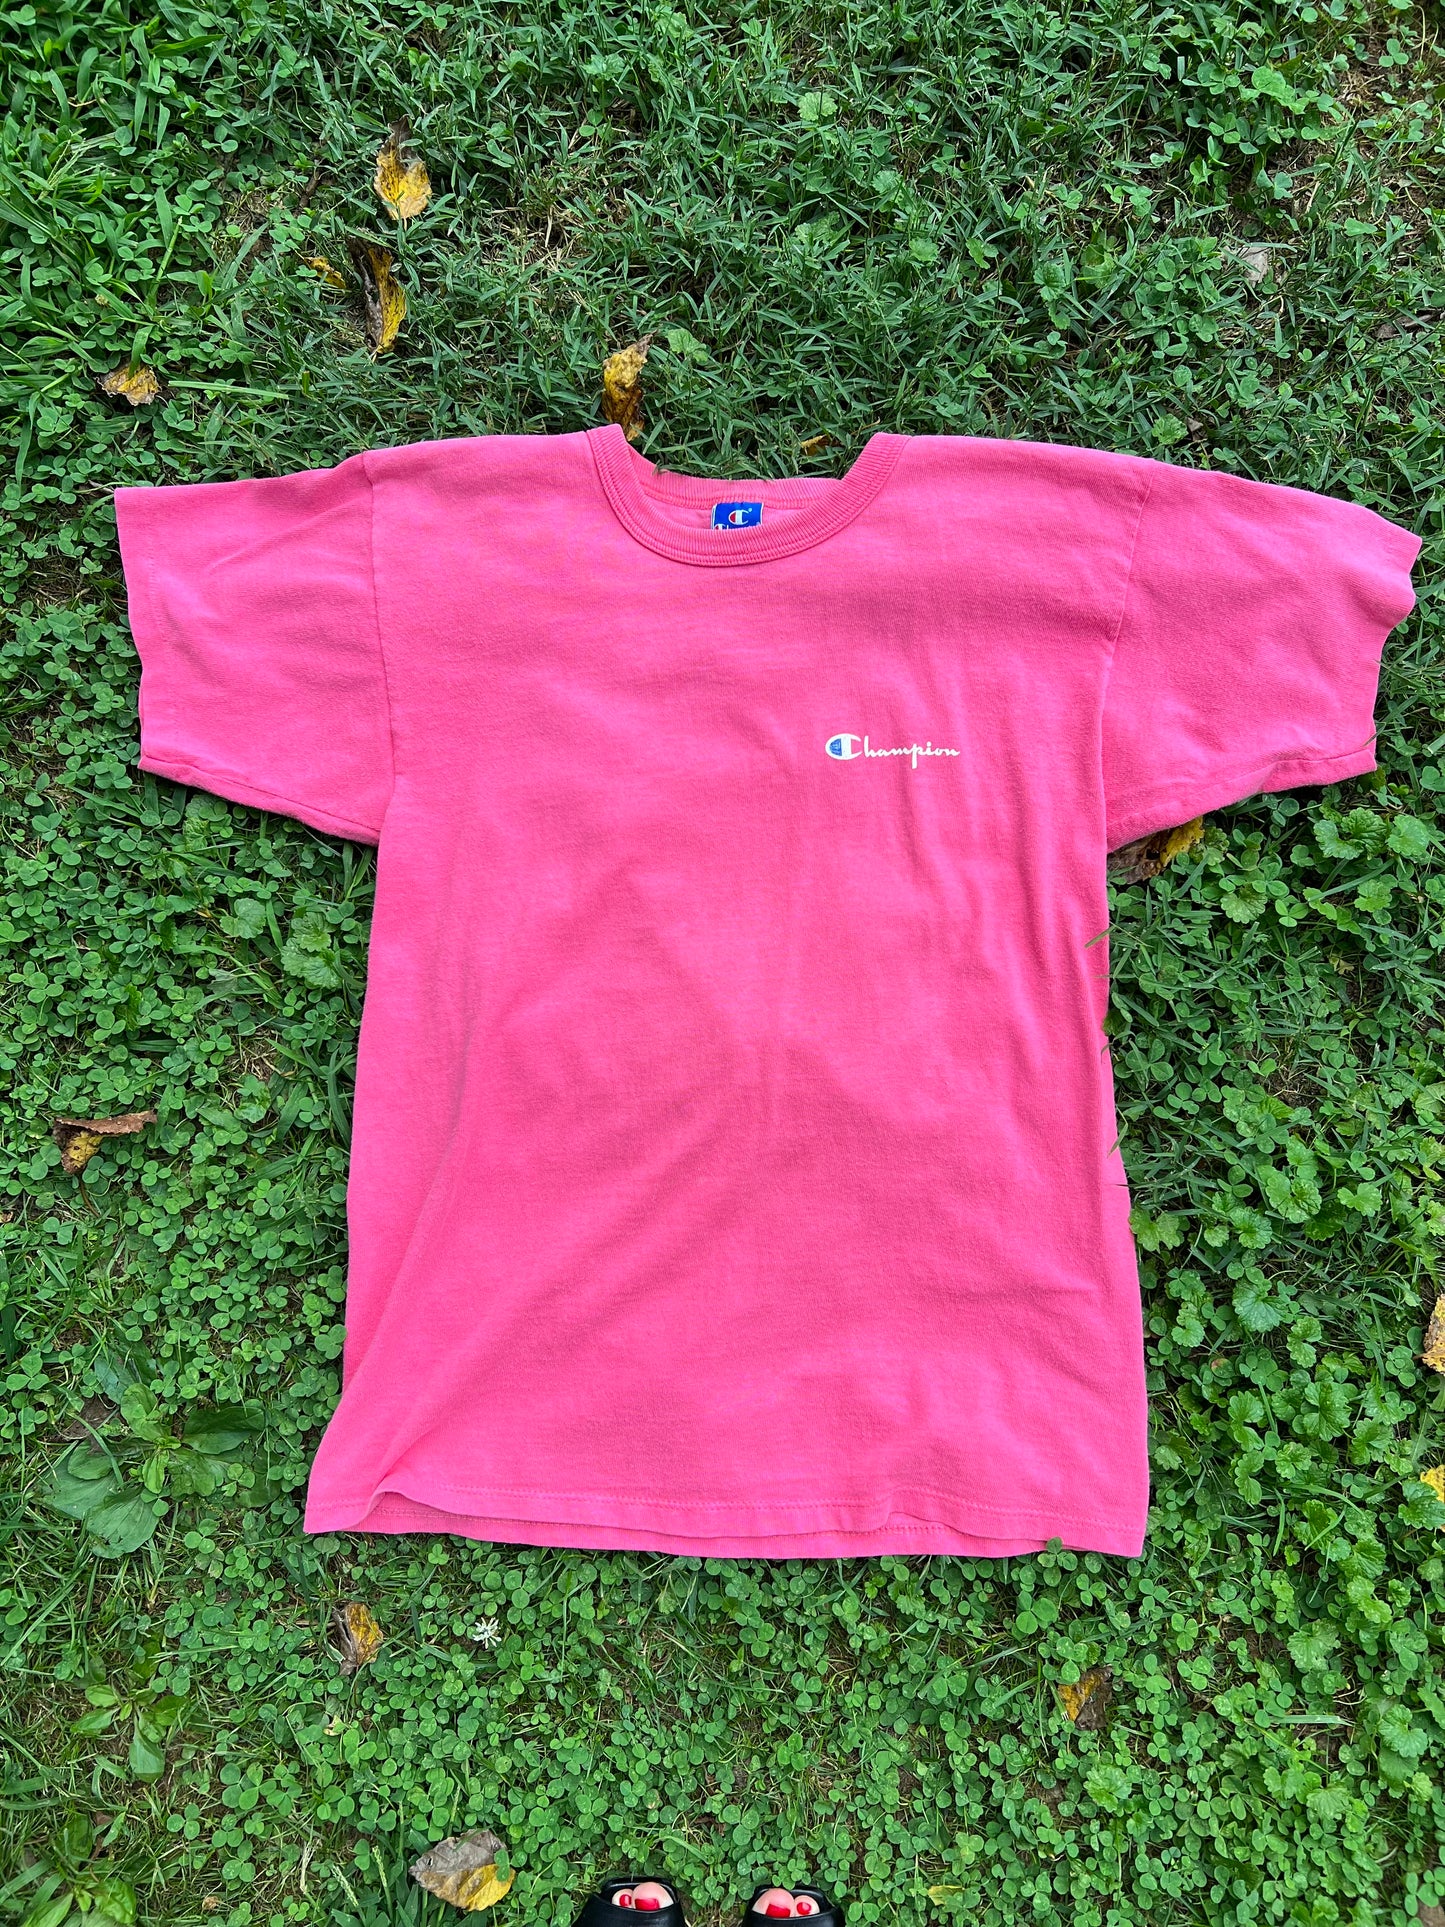 Pink Champion T-shirt